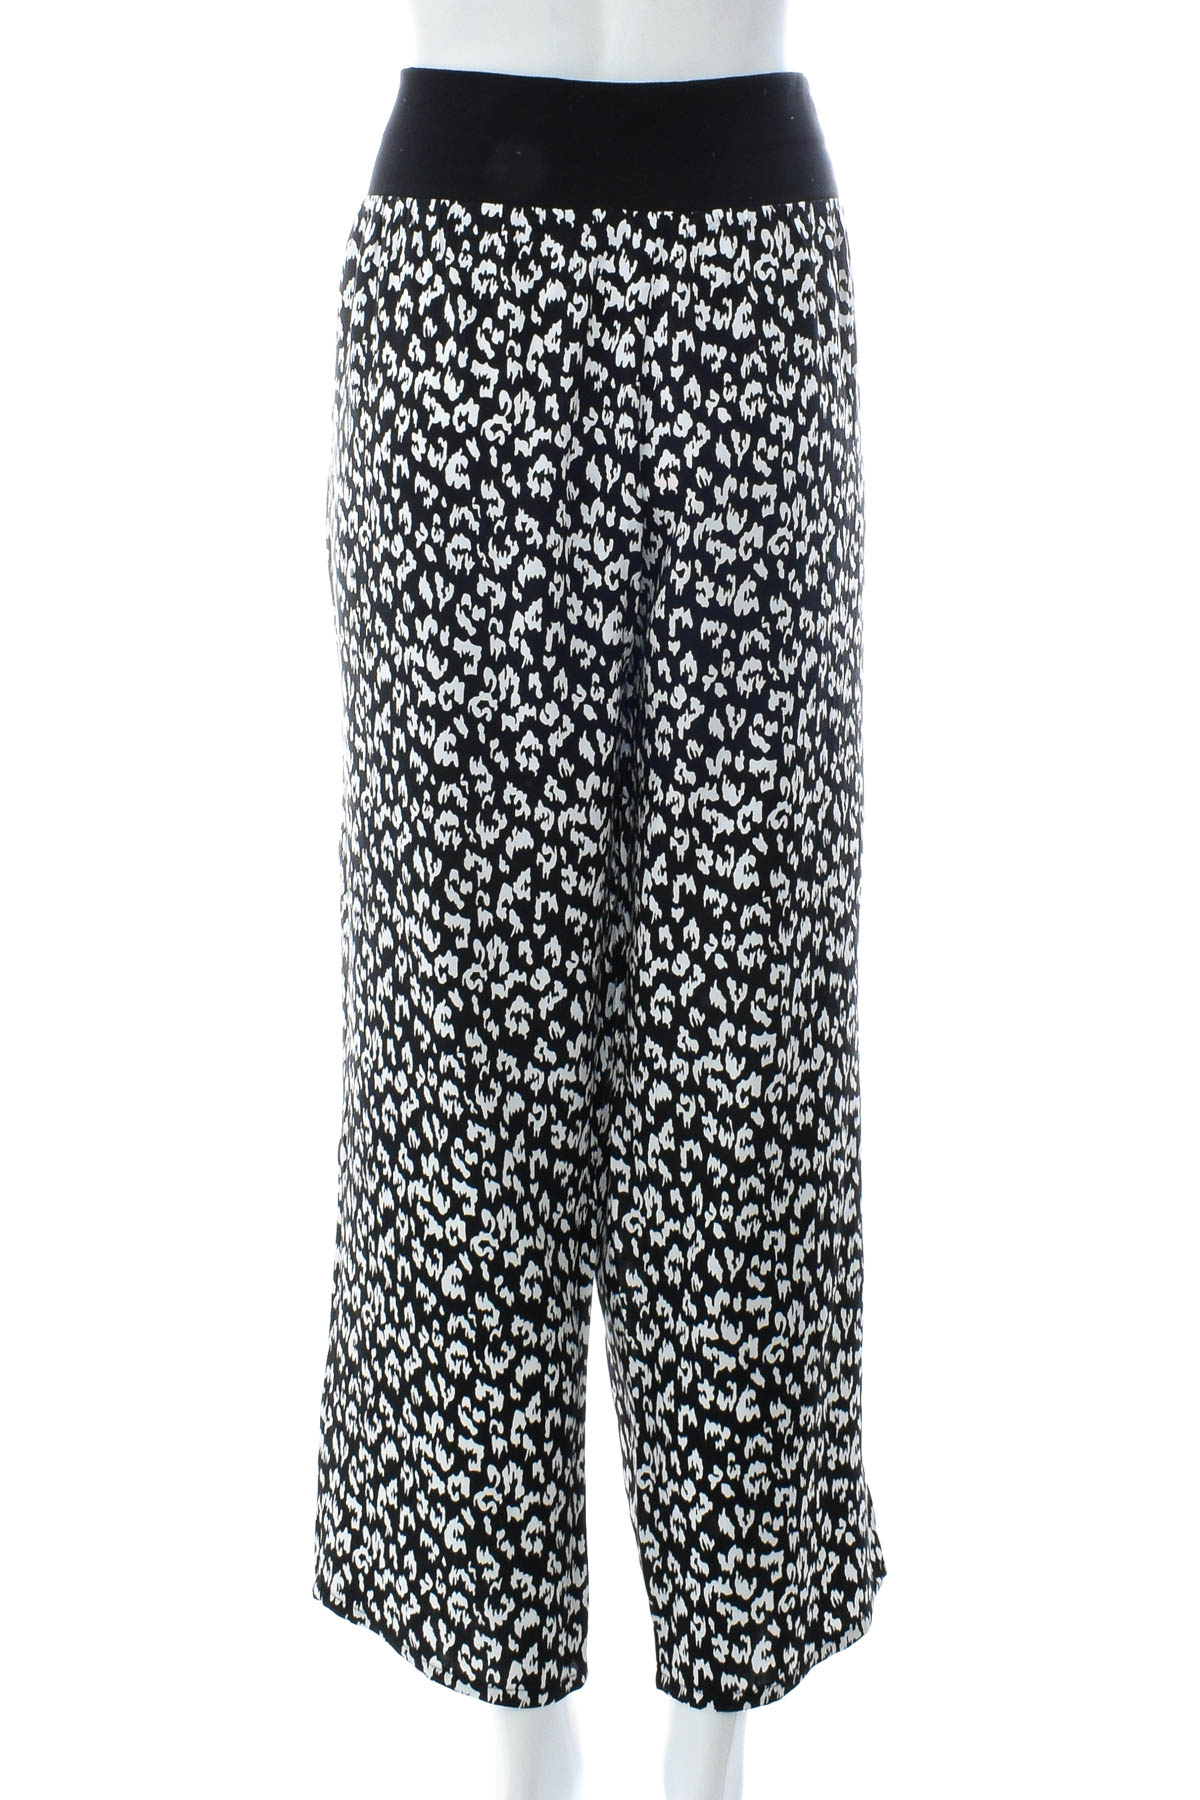 Women's trousers - Threadz - 1